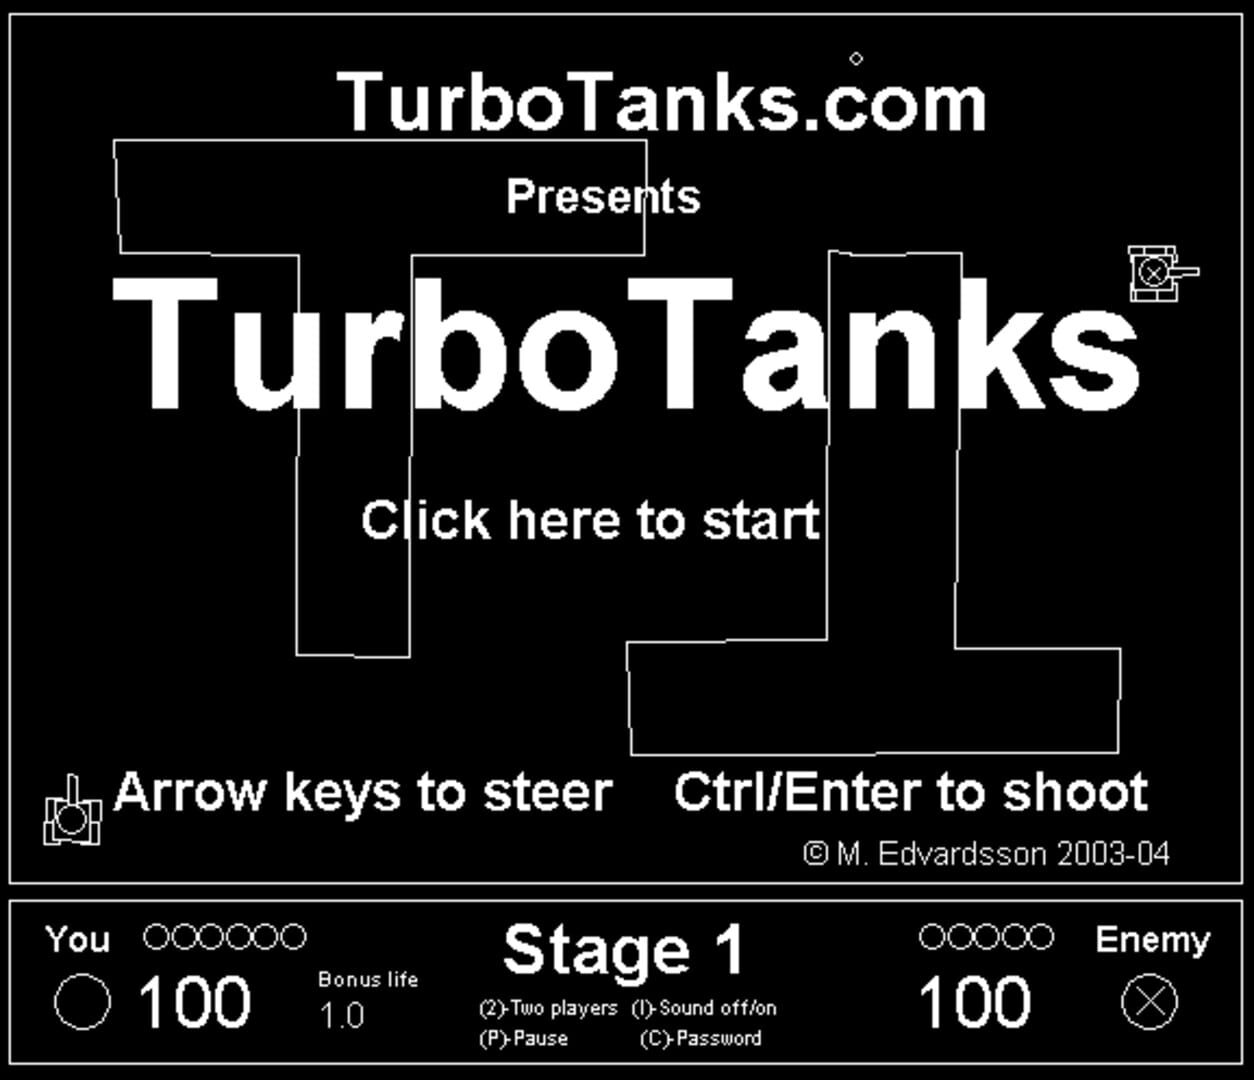 Turbo Tanks featured image